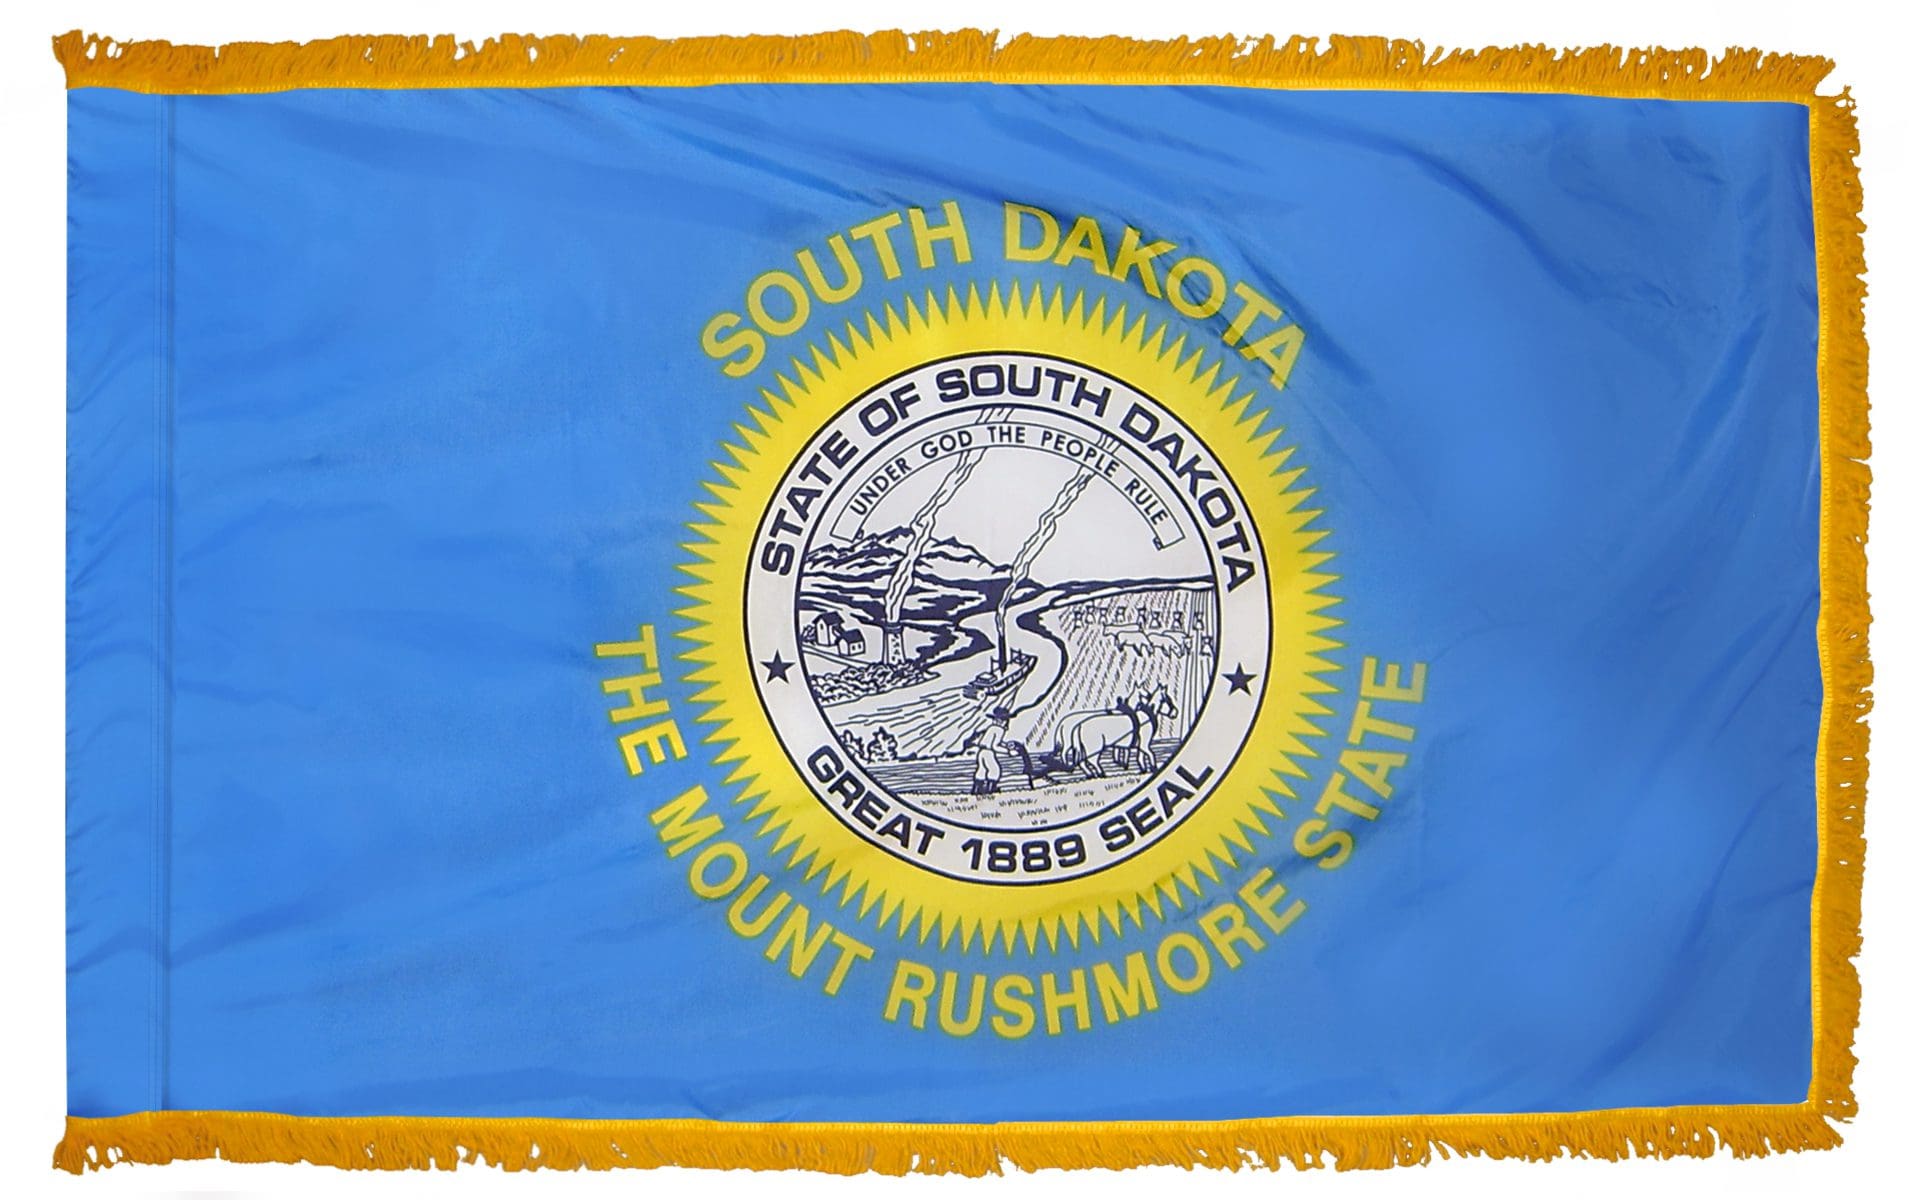 South Dakota State Flag 3x5 or 4x6 ft. (fringed)